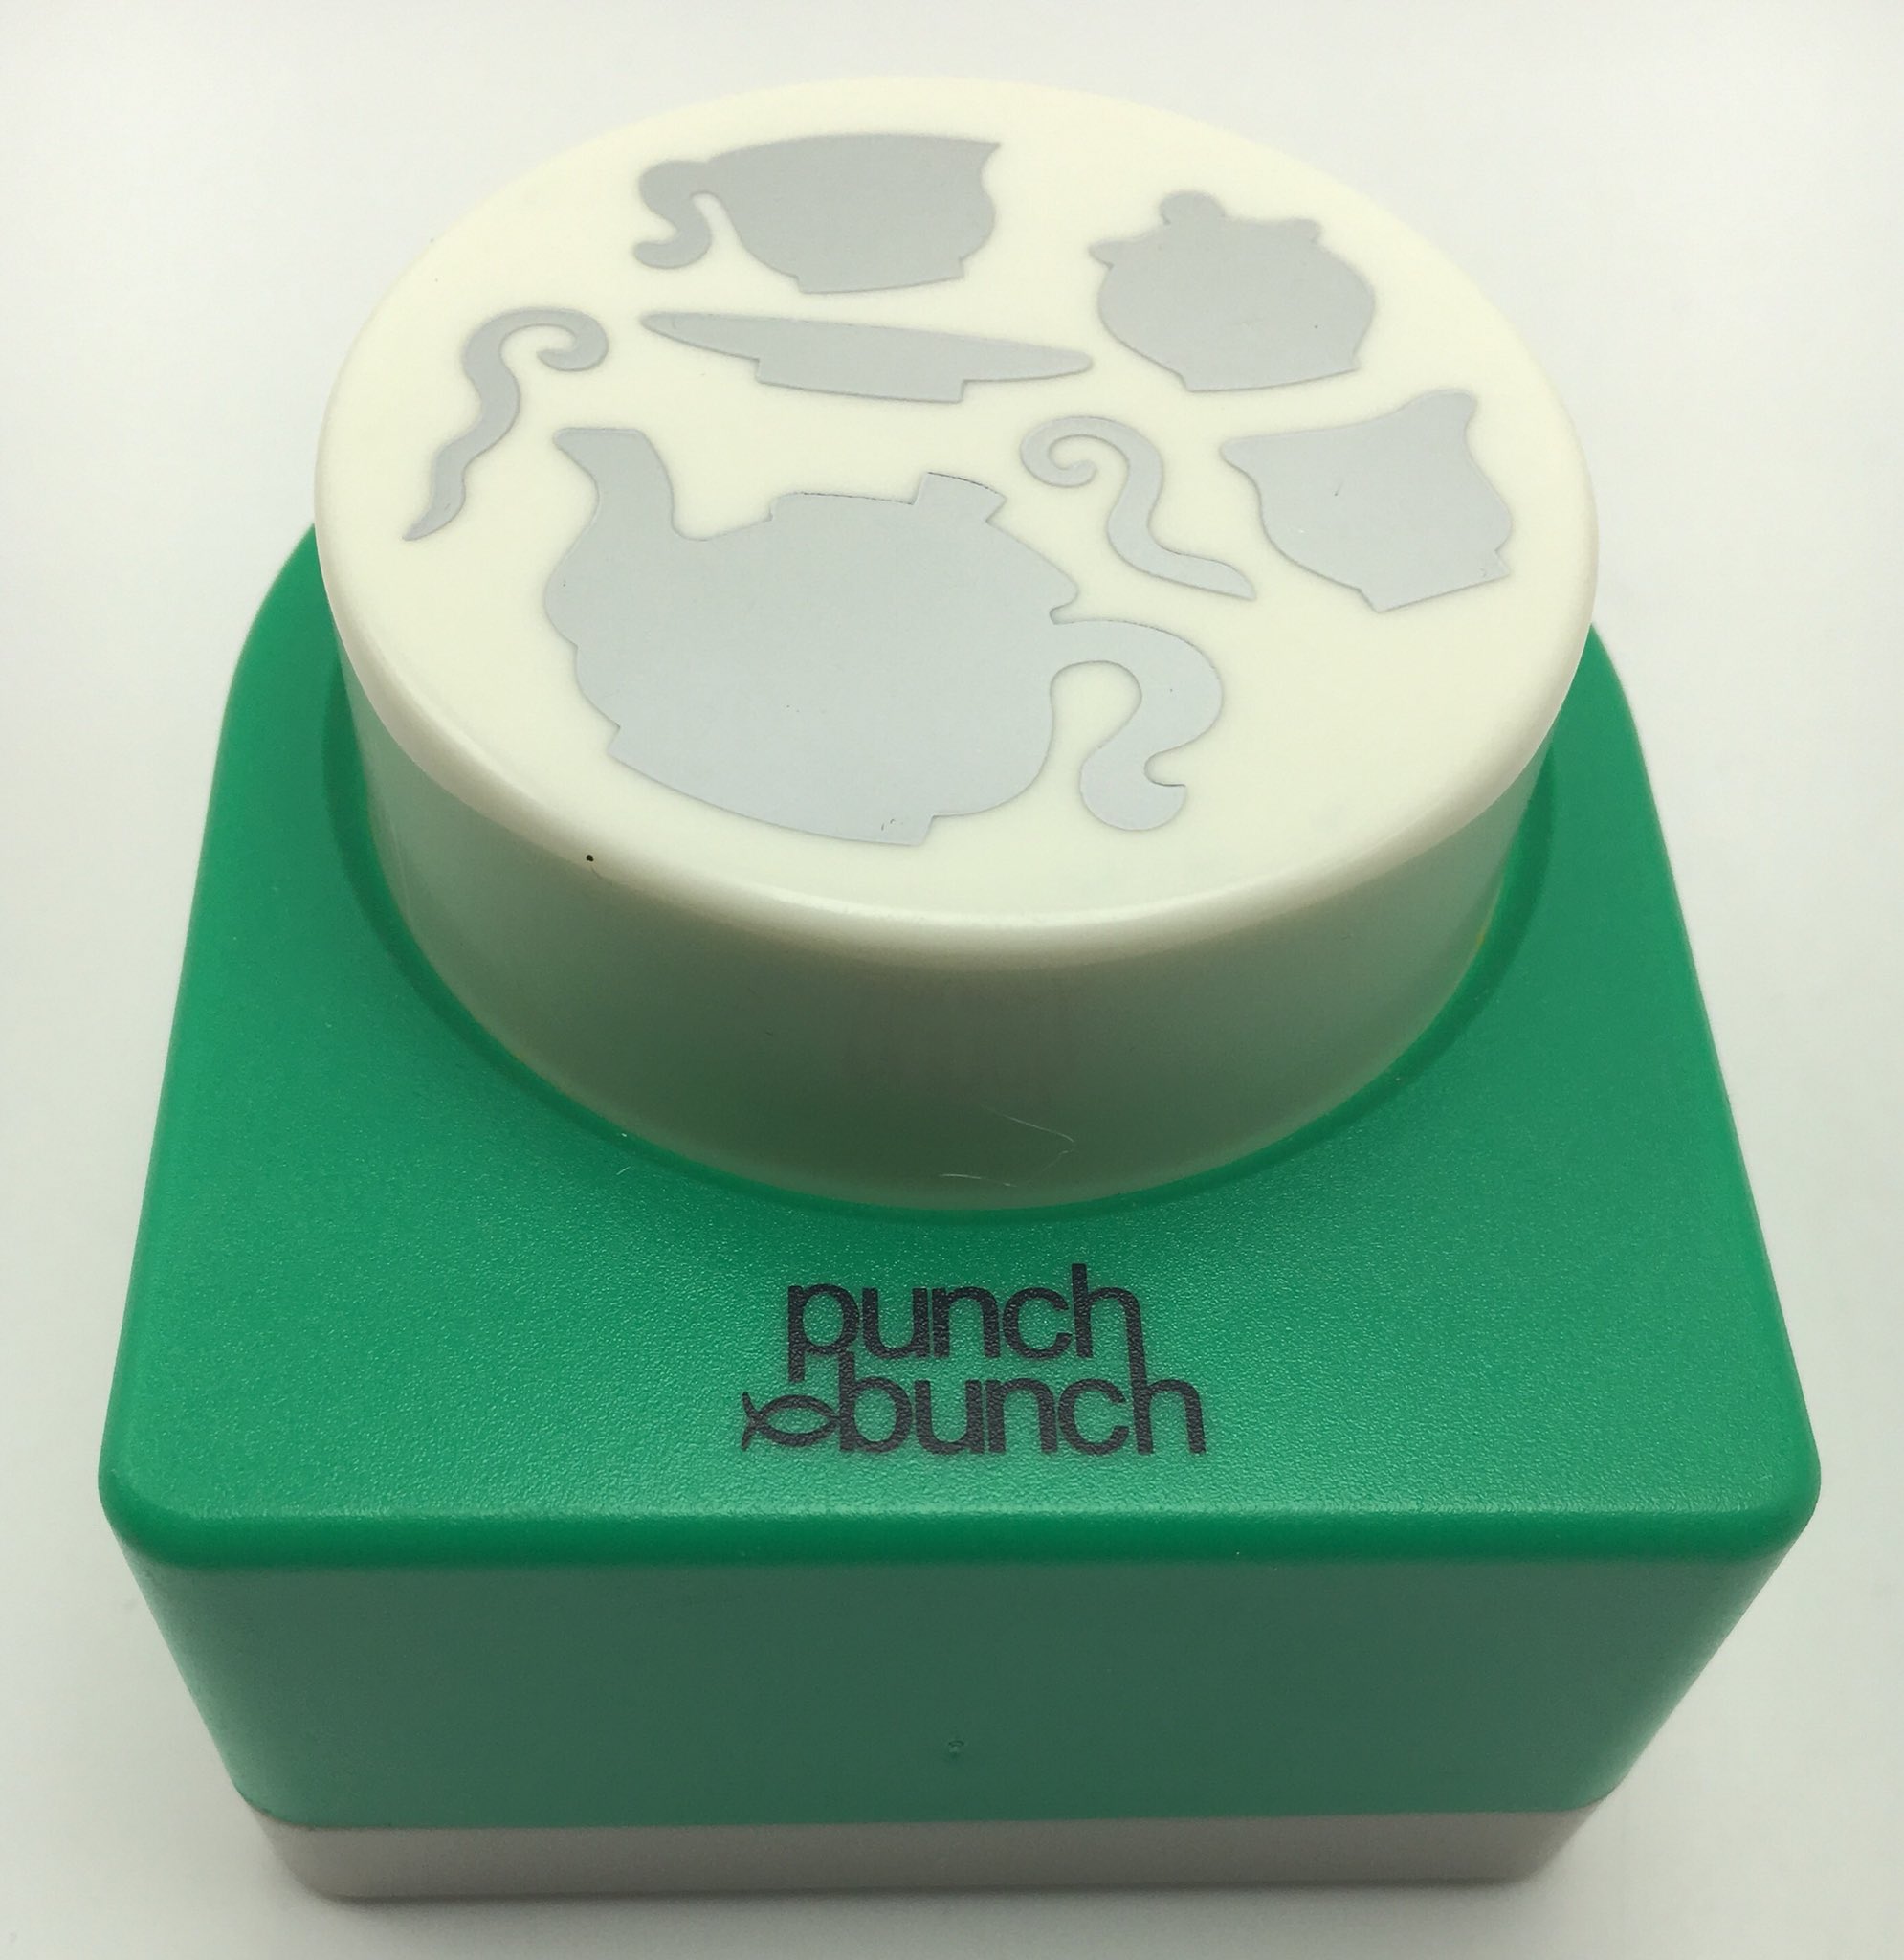 Gizmos-Attic on X: "Large Punch Bunch Paper Punch Tea Party Teapot Tea Cup  ☕️ https://t.co/erxG2icmNE #PunchBunch #PaperPunch #Tea #TeaTime #TeaCup # Teapot #TeaParty #DIY #Crafturday #Crafts #Scrapbooking #GizmosAttic  https://t.co/HydLiA7btk" / X